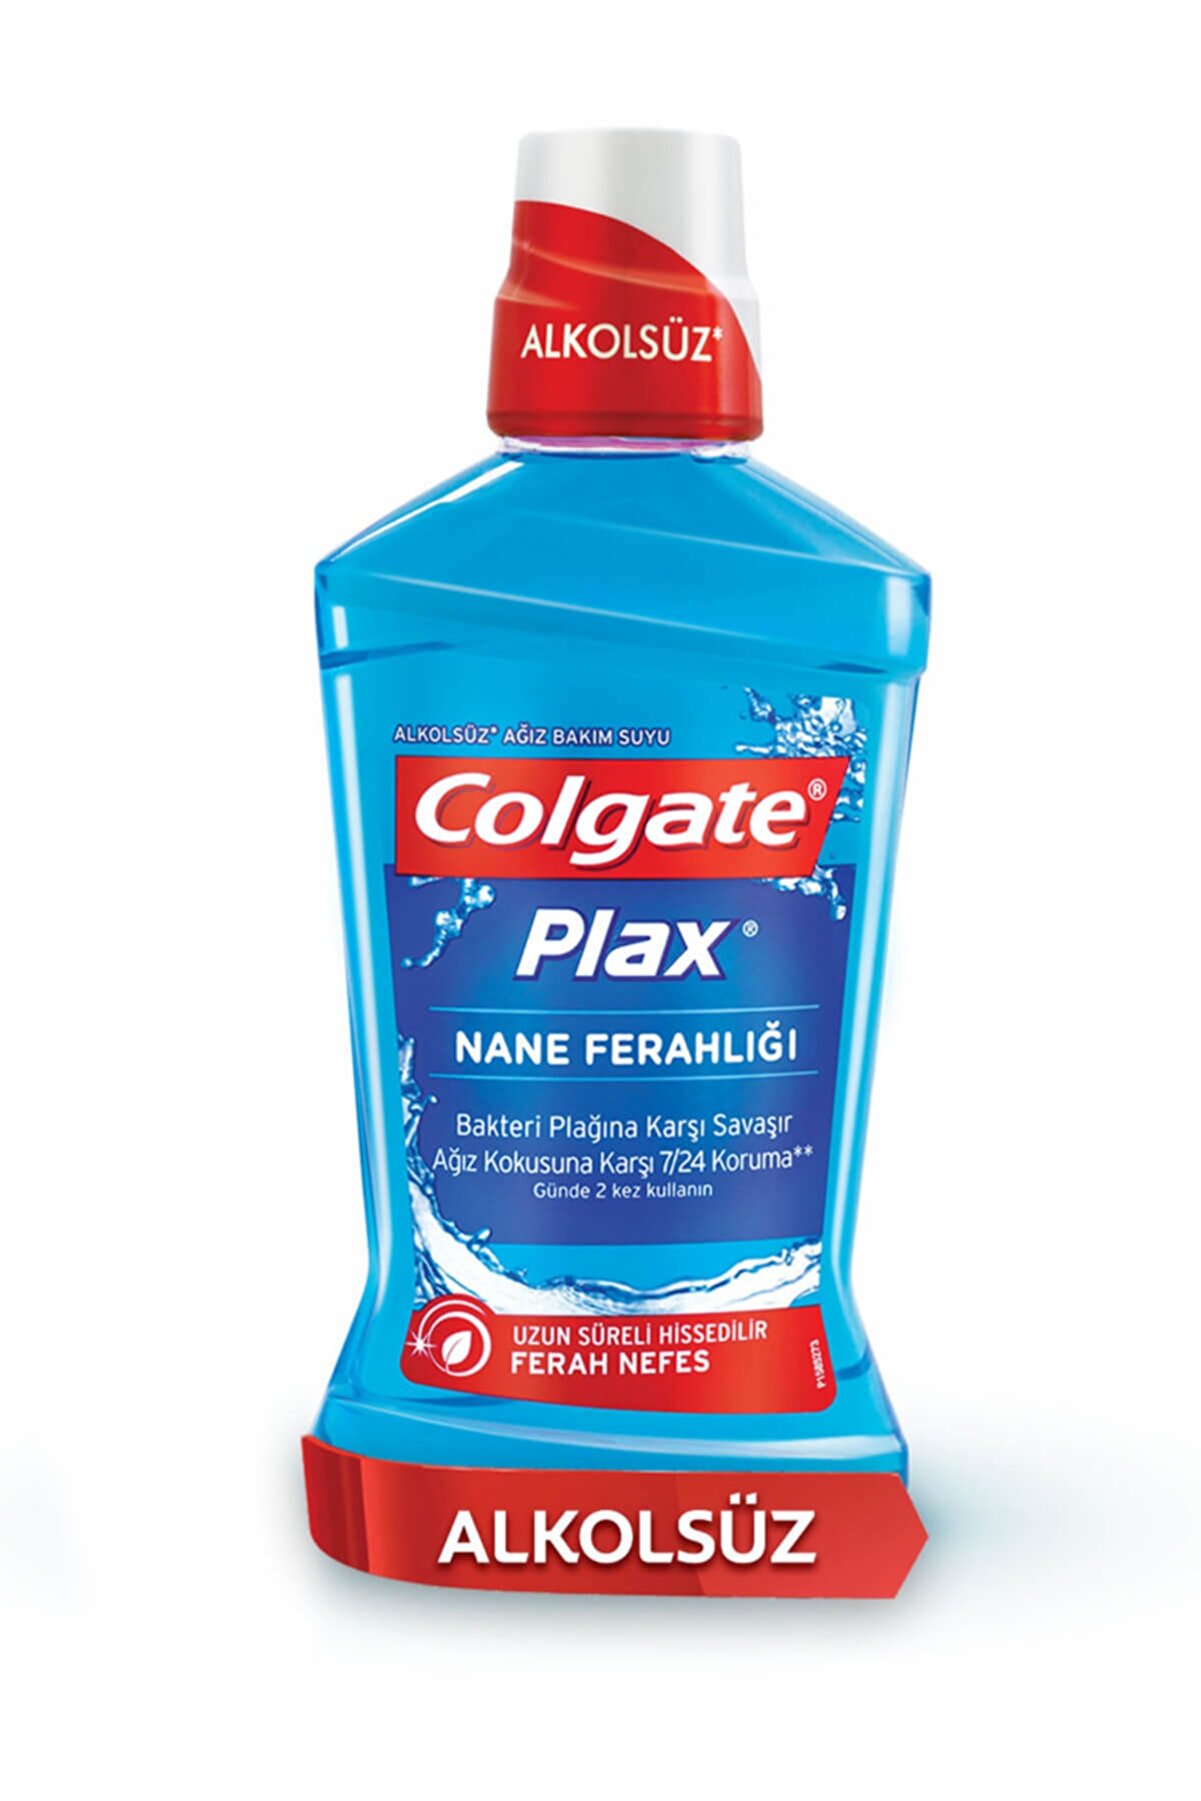 Colgate Nane Ferahlığı Plax Alkolsüz Ağız Bakım Suyu 500 ml